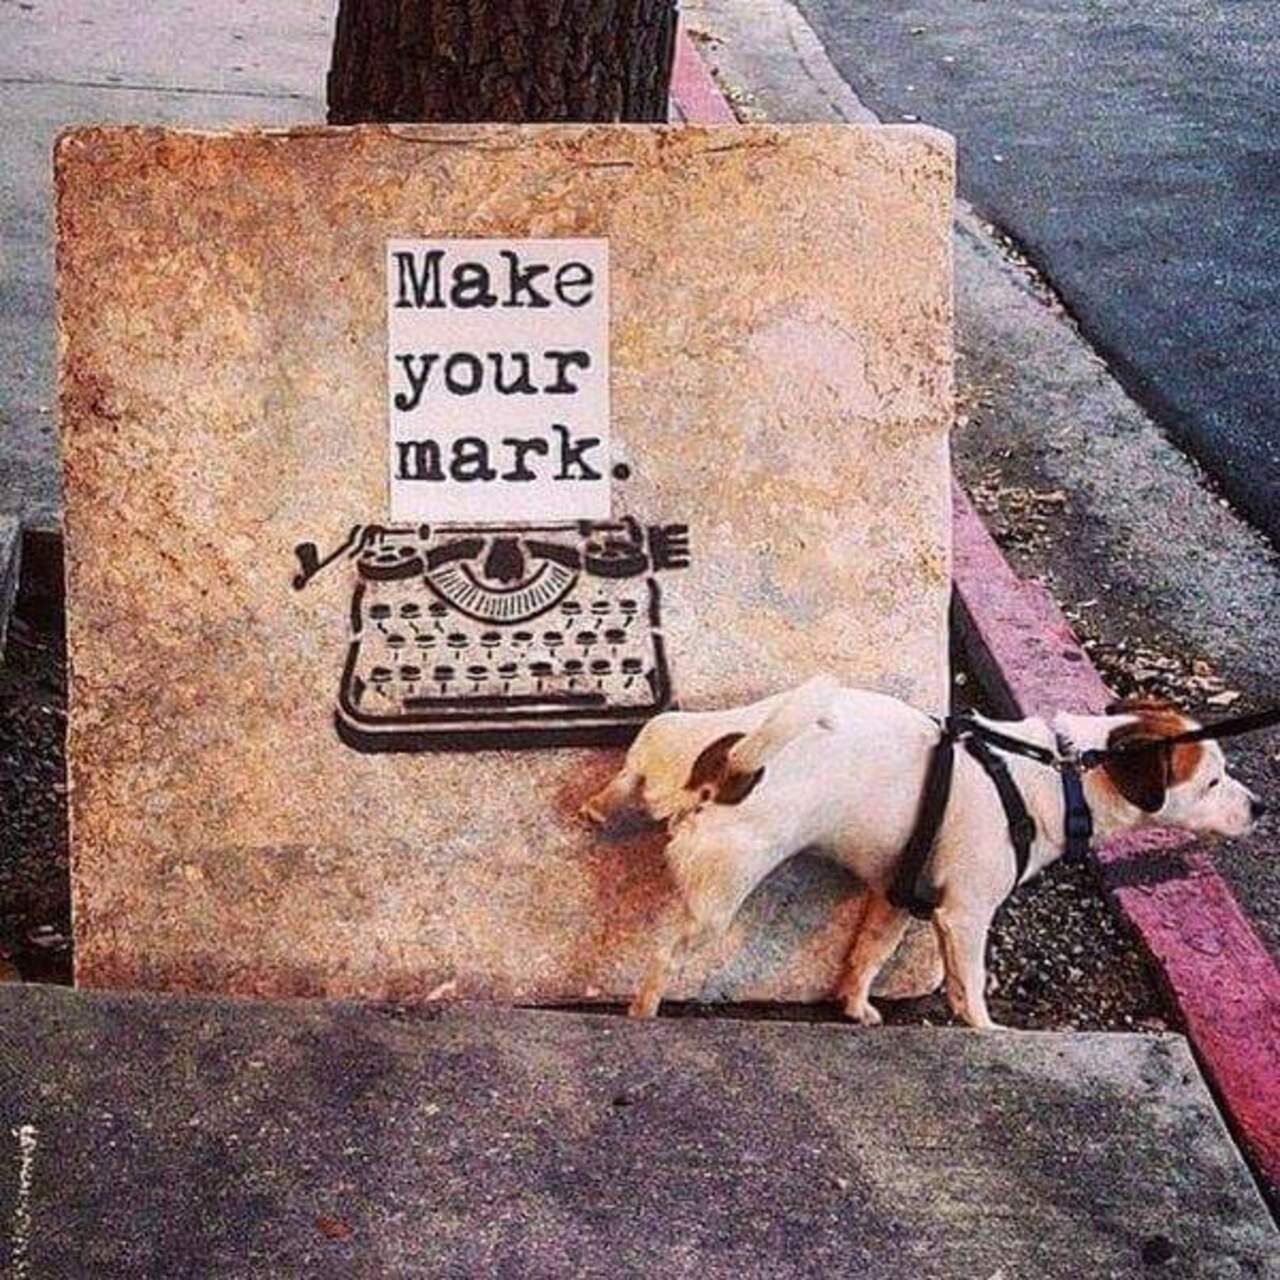 Do what you Love, Make your Mark! – #Streetart #Quote | Be ▲rtist - Be ▲rt https://beartistbeart.com/2016/08/18/do-what-you-love-make-your-mark-streetart-quote/?utm_campaign=crowdfire&utm_content=crowdfire&utm_medium=social&utm_source=twitter https://t.co/dDs29T9PrI